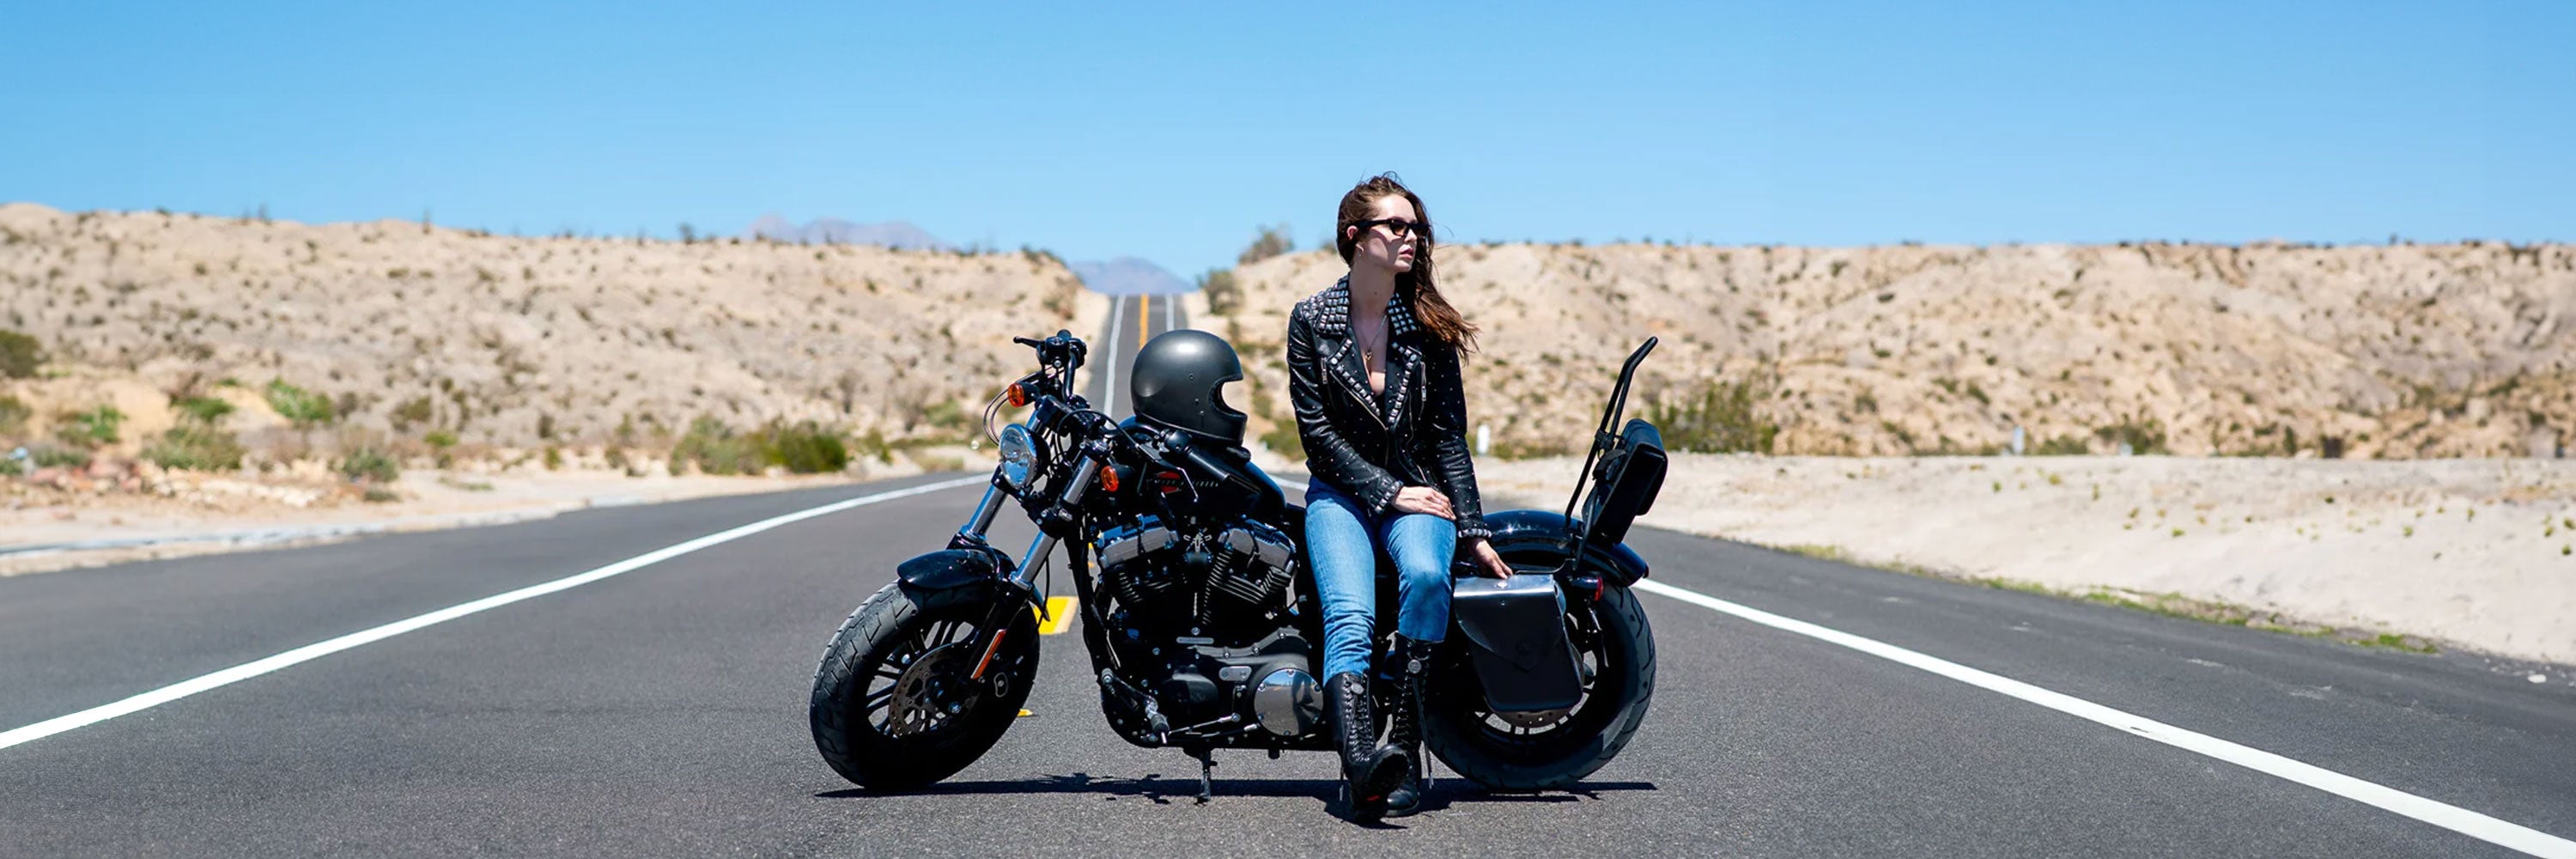 Harley Davidson Sportster Saddlebags